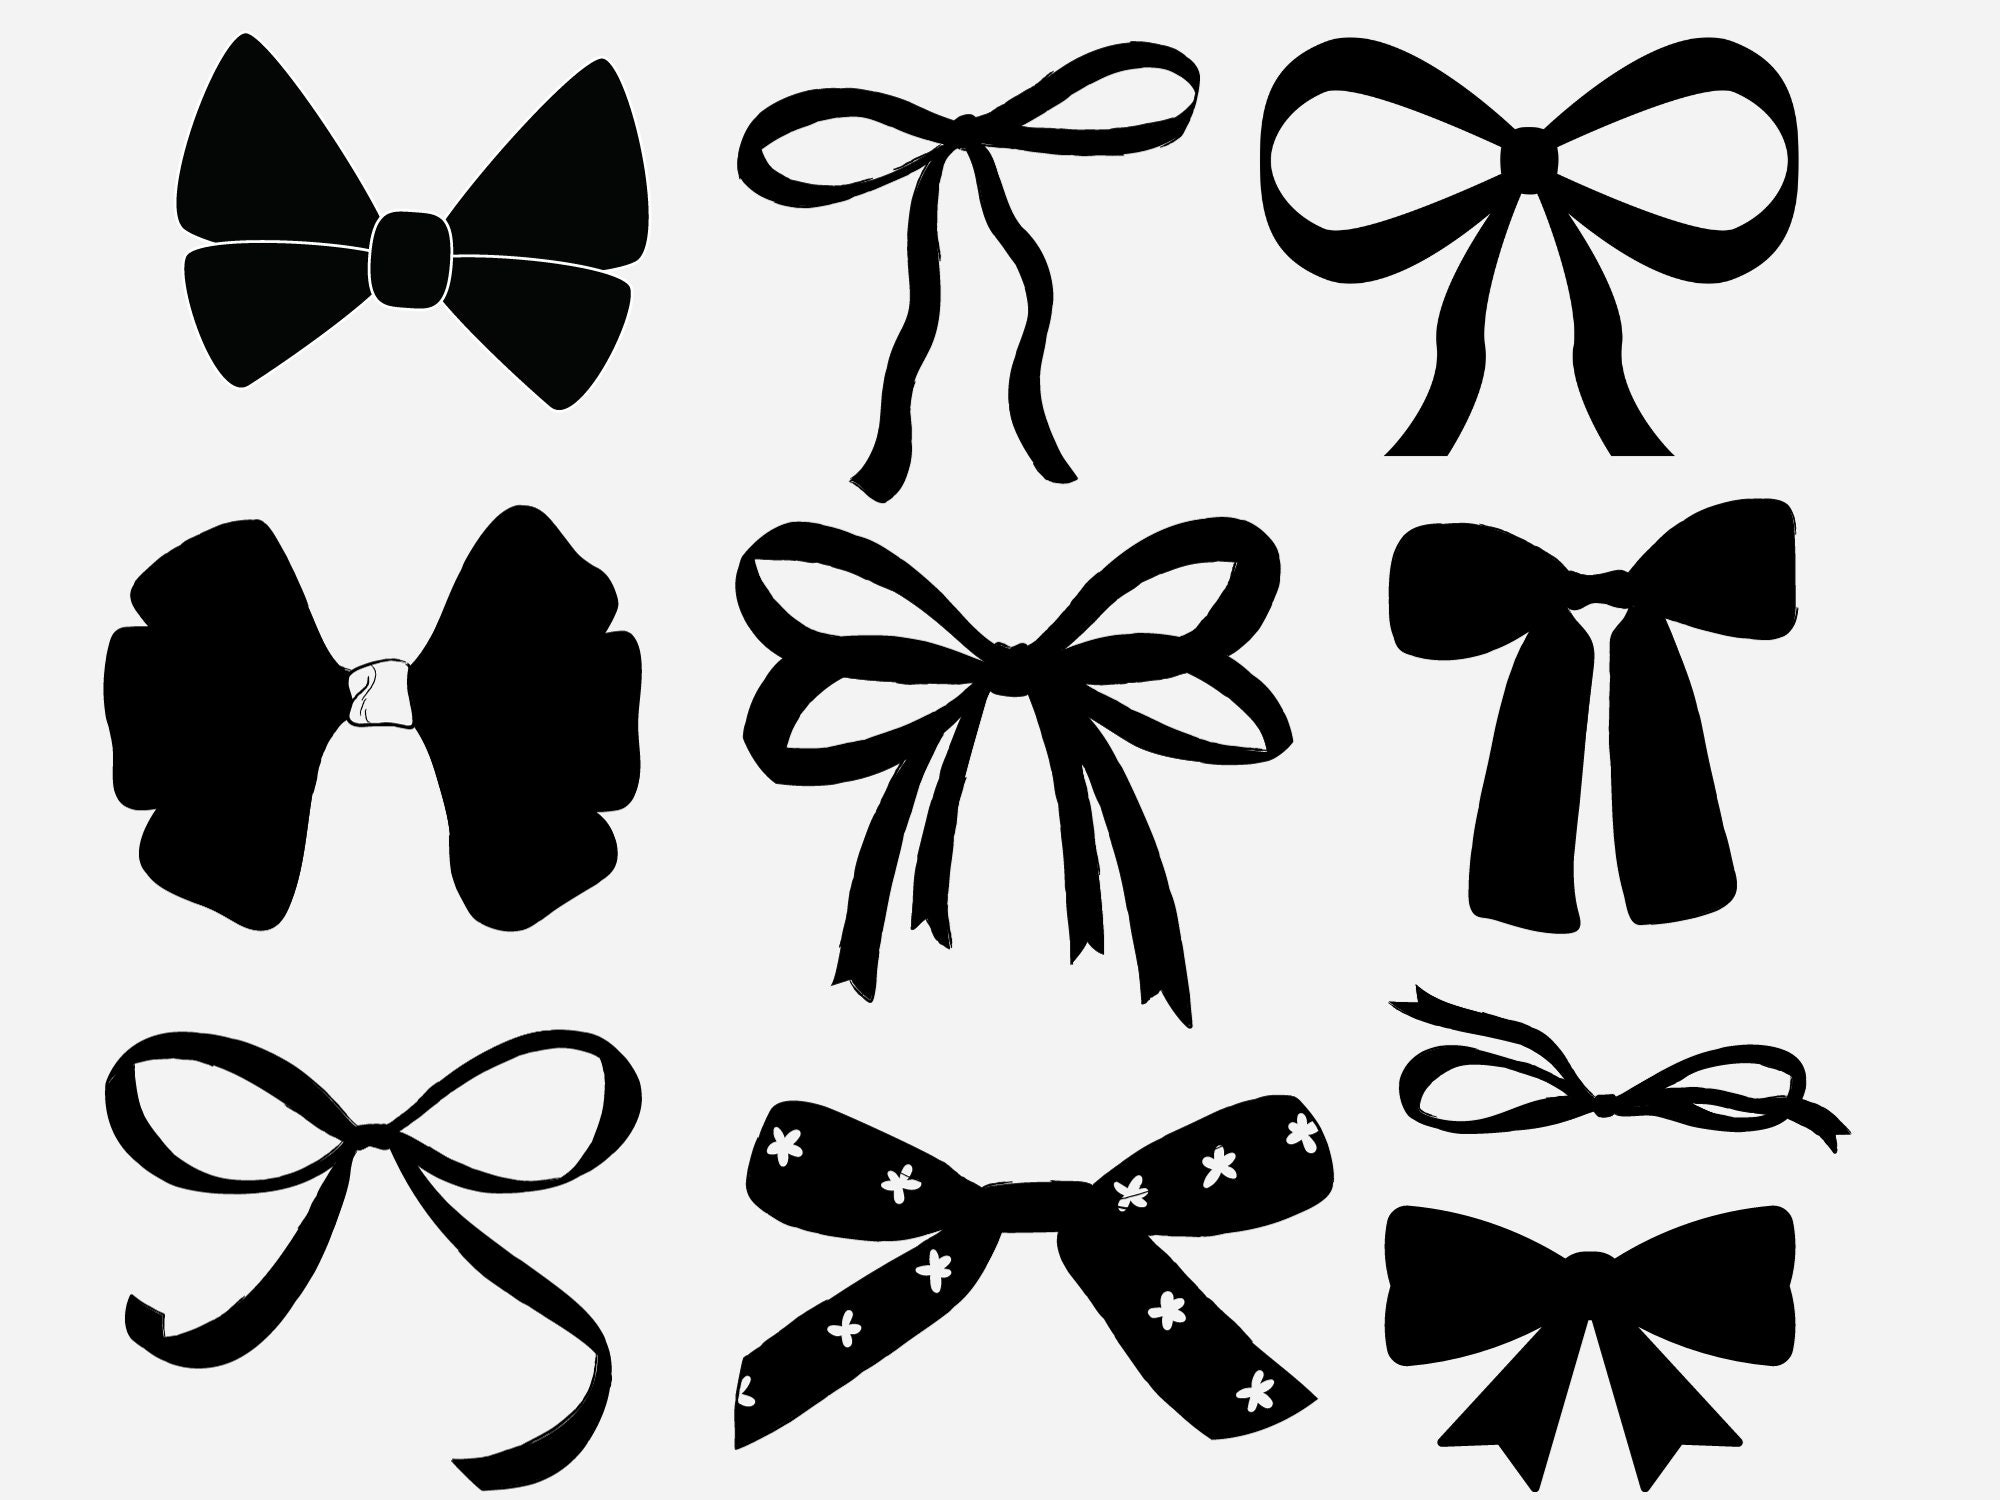 Ribbon Bow Silhouette Files, Ribbon Bow Png, Ribbon Bow Cutting Clipart,  Ribbon Bow Svg Bundle, Ribbon Bow Dxf, Ribbon Bow Svg Design